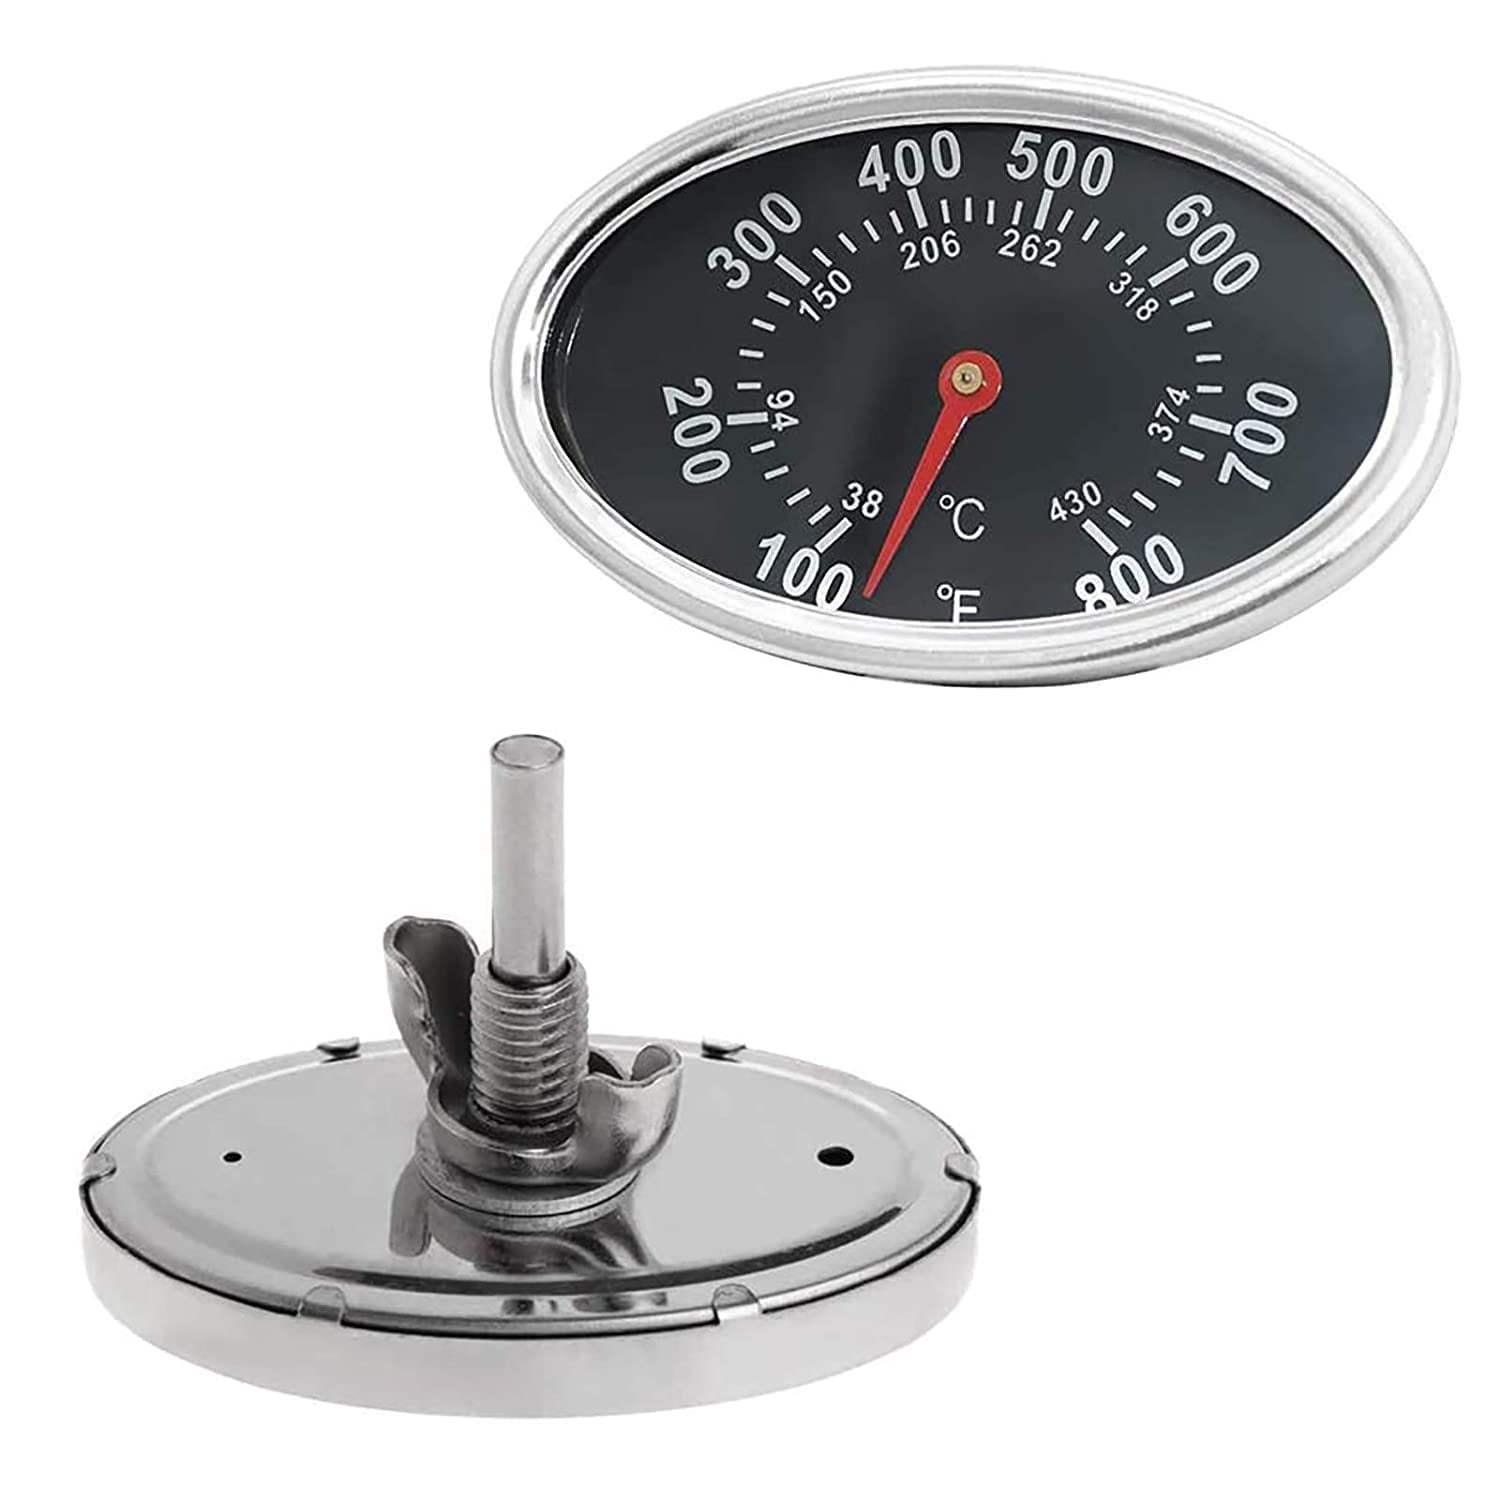 Brinkmann Probe Mounted Heat Indicator Thermometer 2 15/16" x 1 7/8" New 22549 